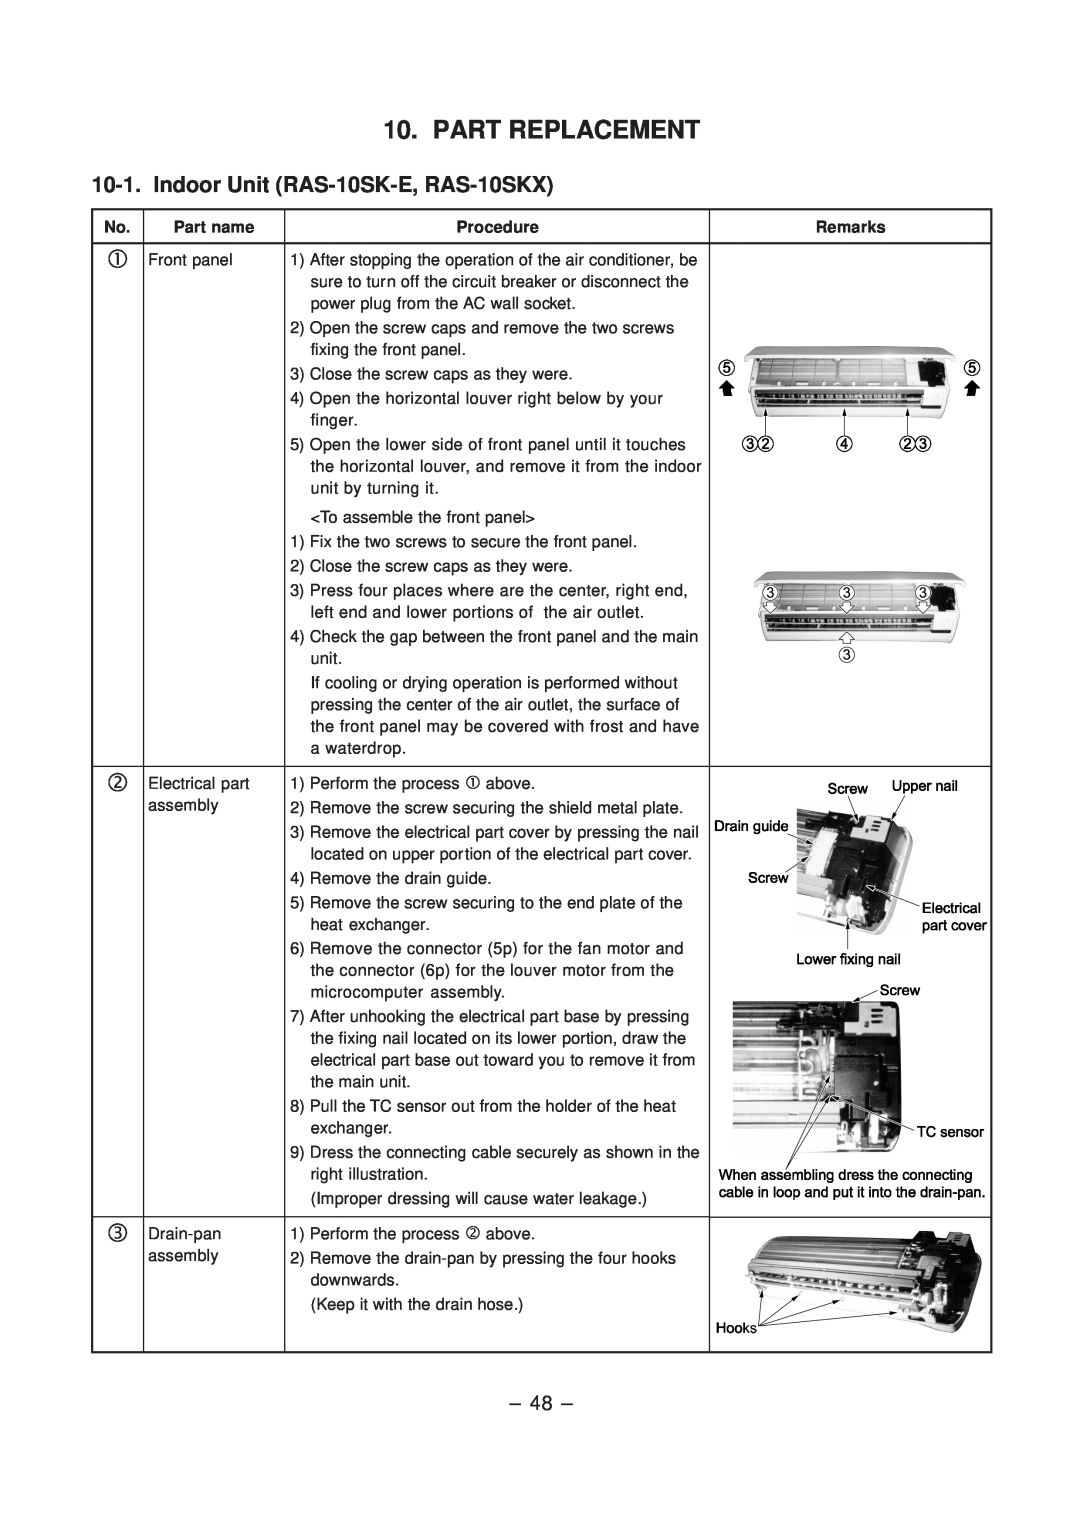 Toshiba RAS-10SAX, RAS-10SA-E service manual Part Replacement, Indoor Unit RAS-10SK-E, RAS-10SKX 